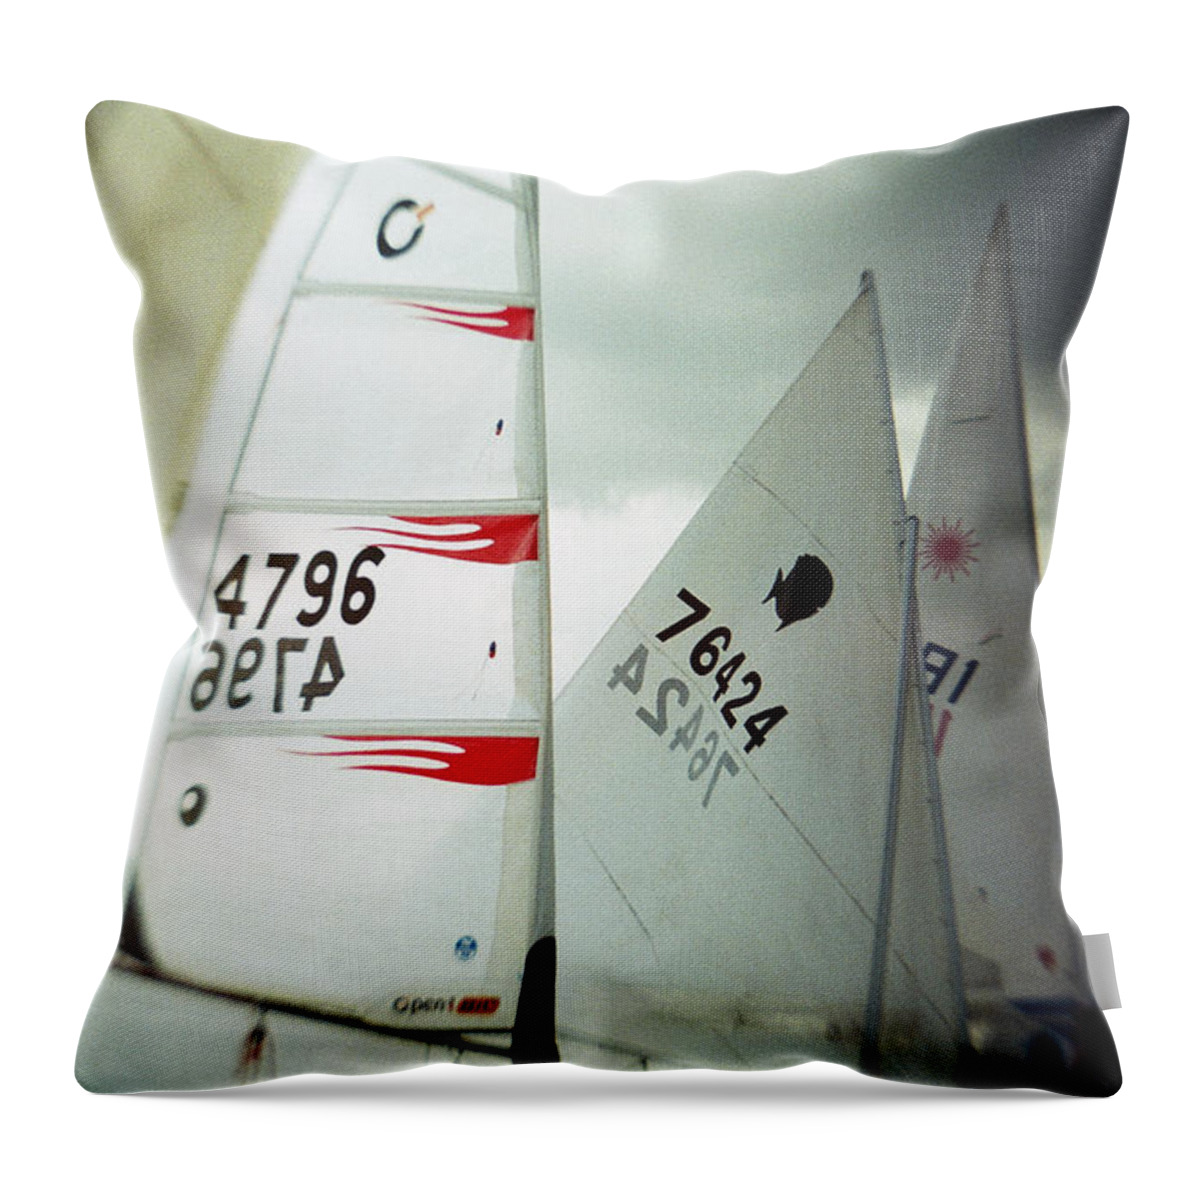 Recesky Throw Pillow featuring the photograph Recesky - Sails by Richard Reeve